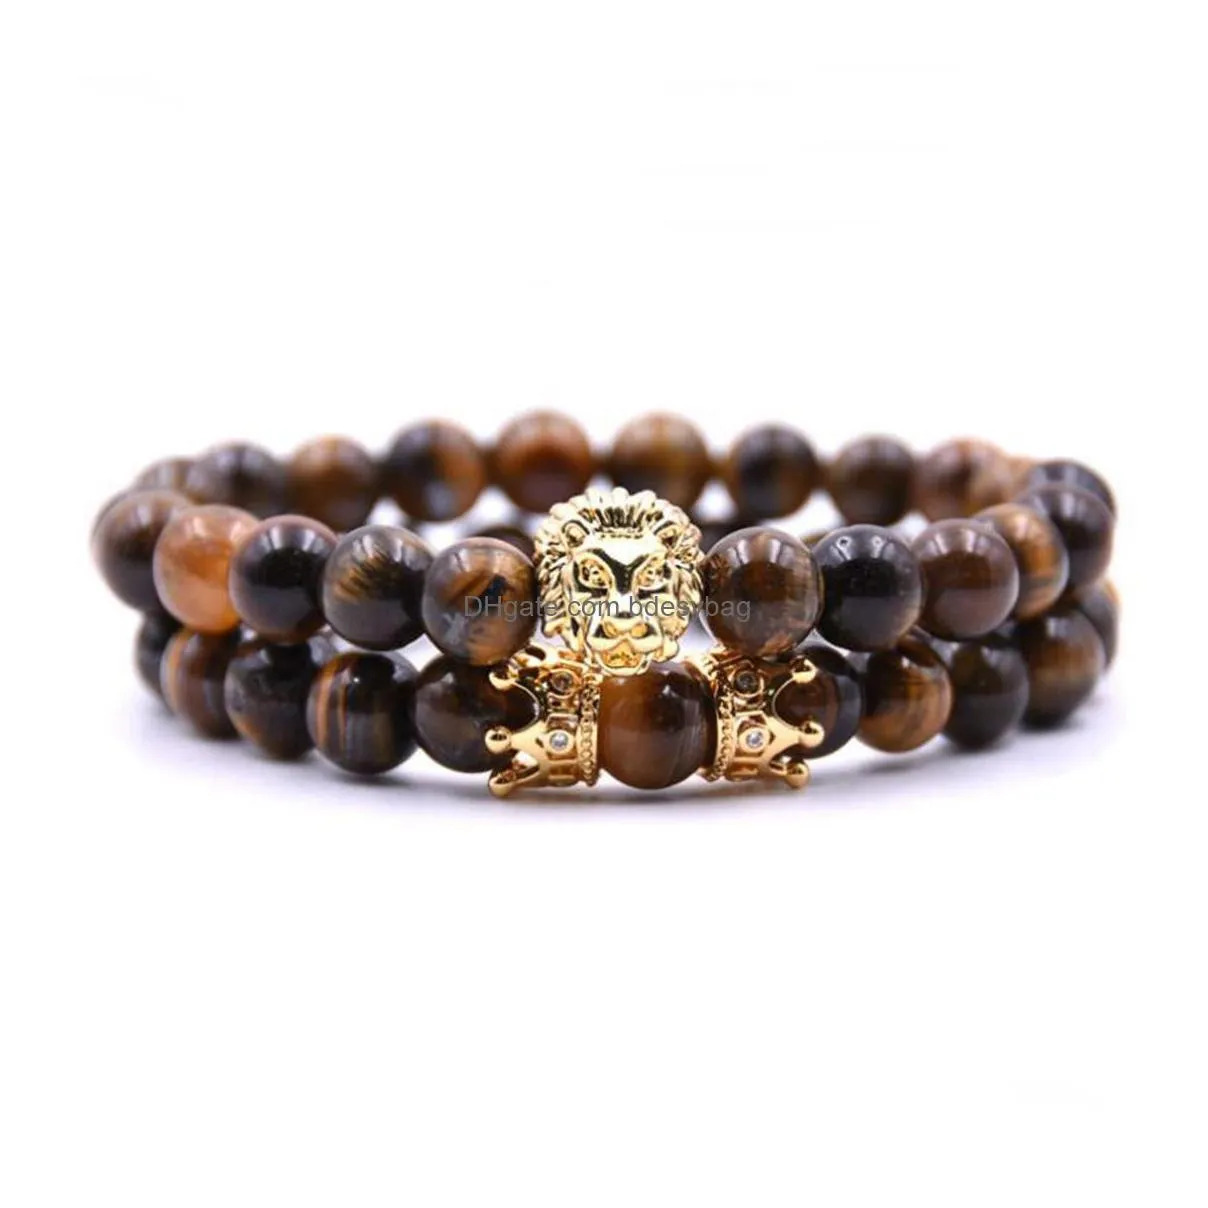 2 pcs/set animal king  head tiger eye bracelet black natural stone crown couple braclet sets for men hand jewelry accessories